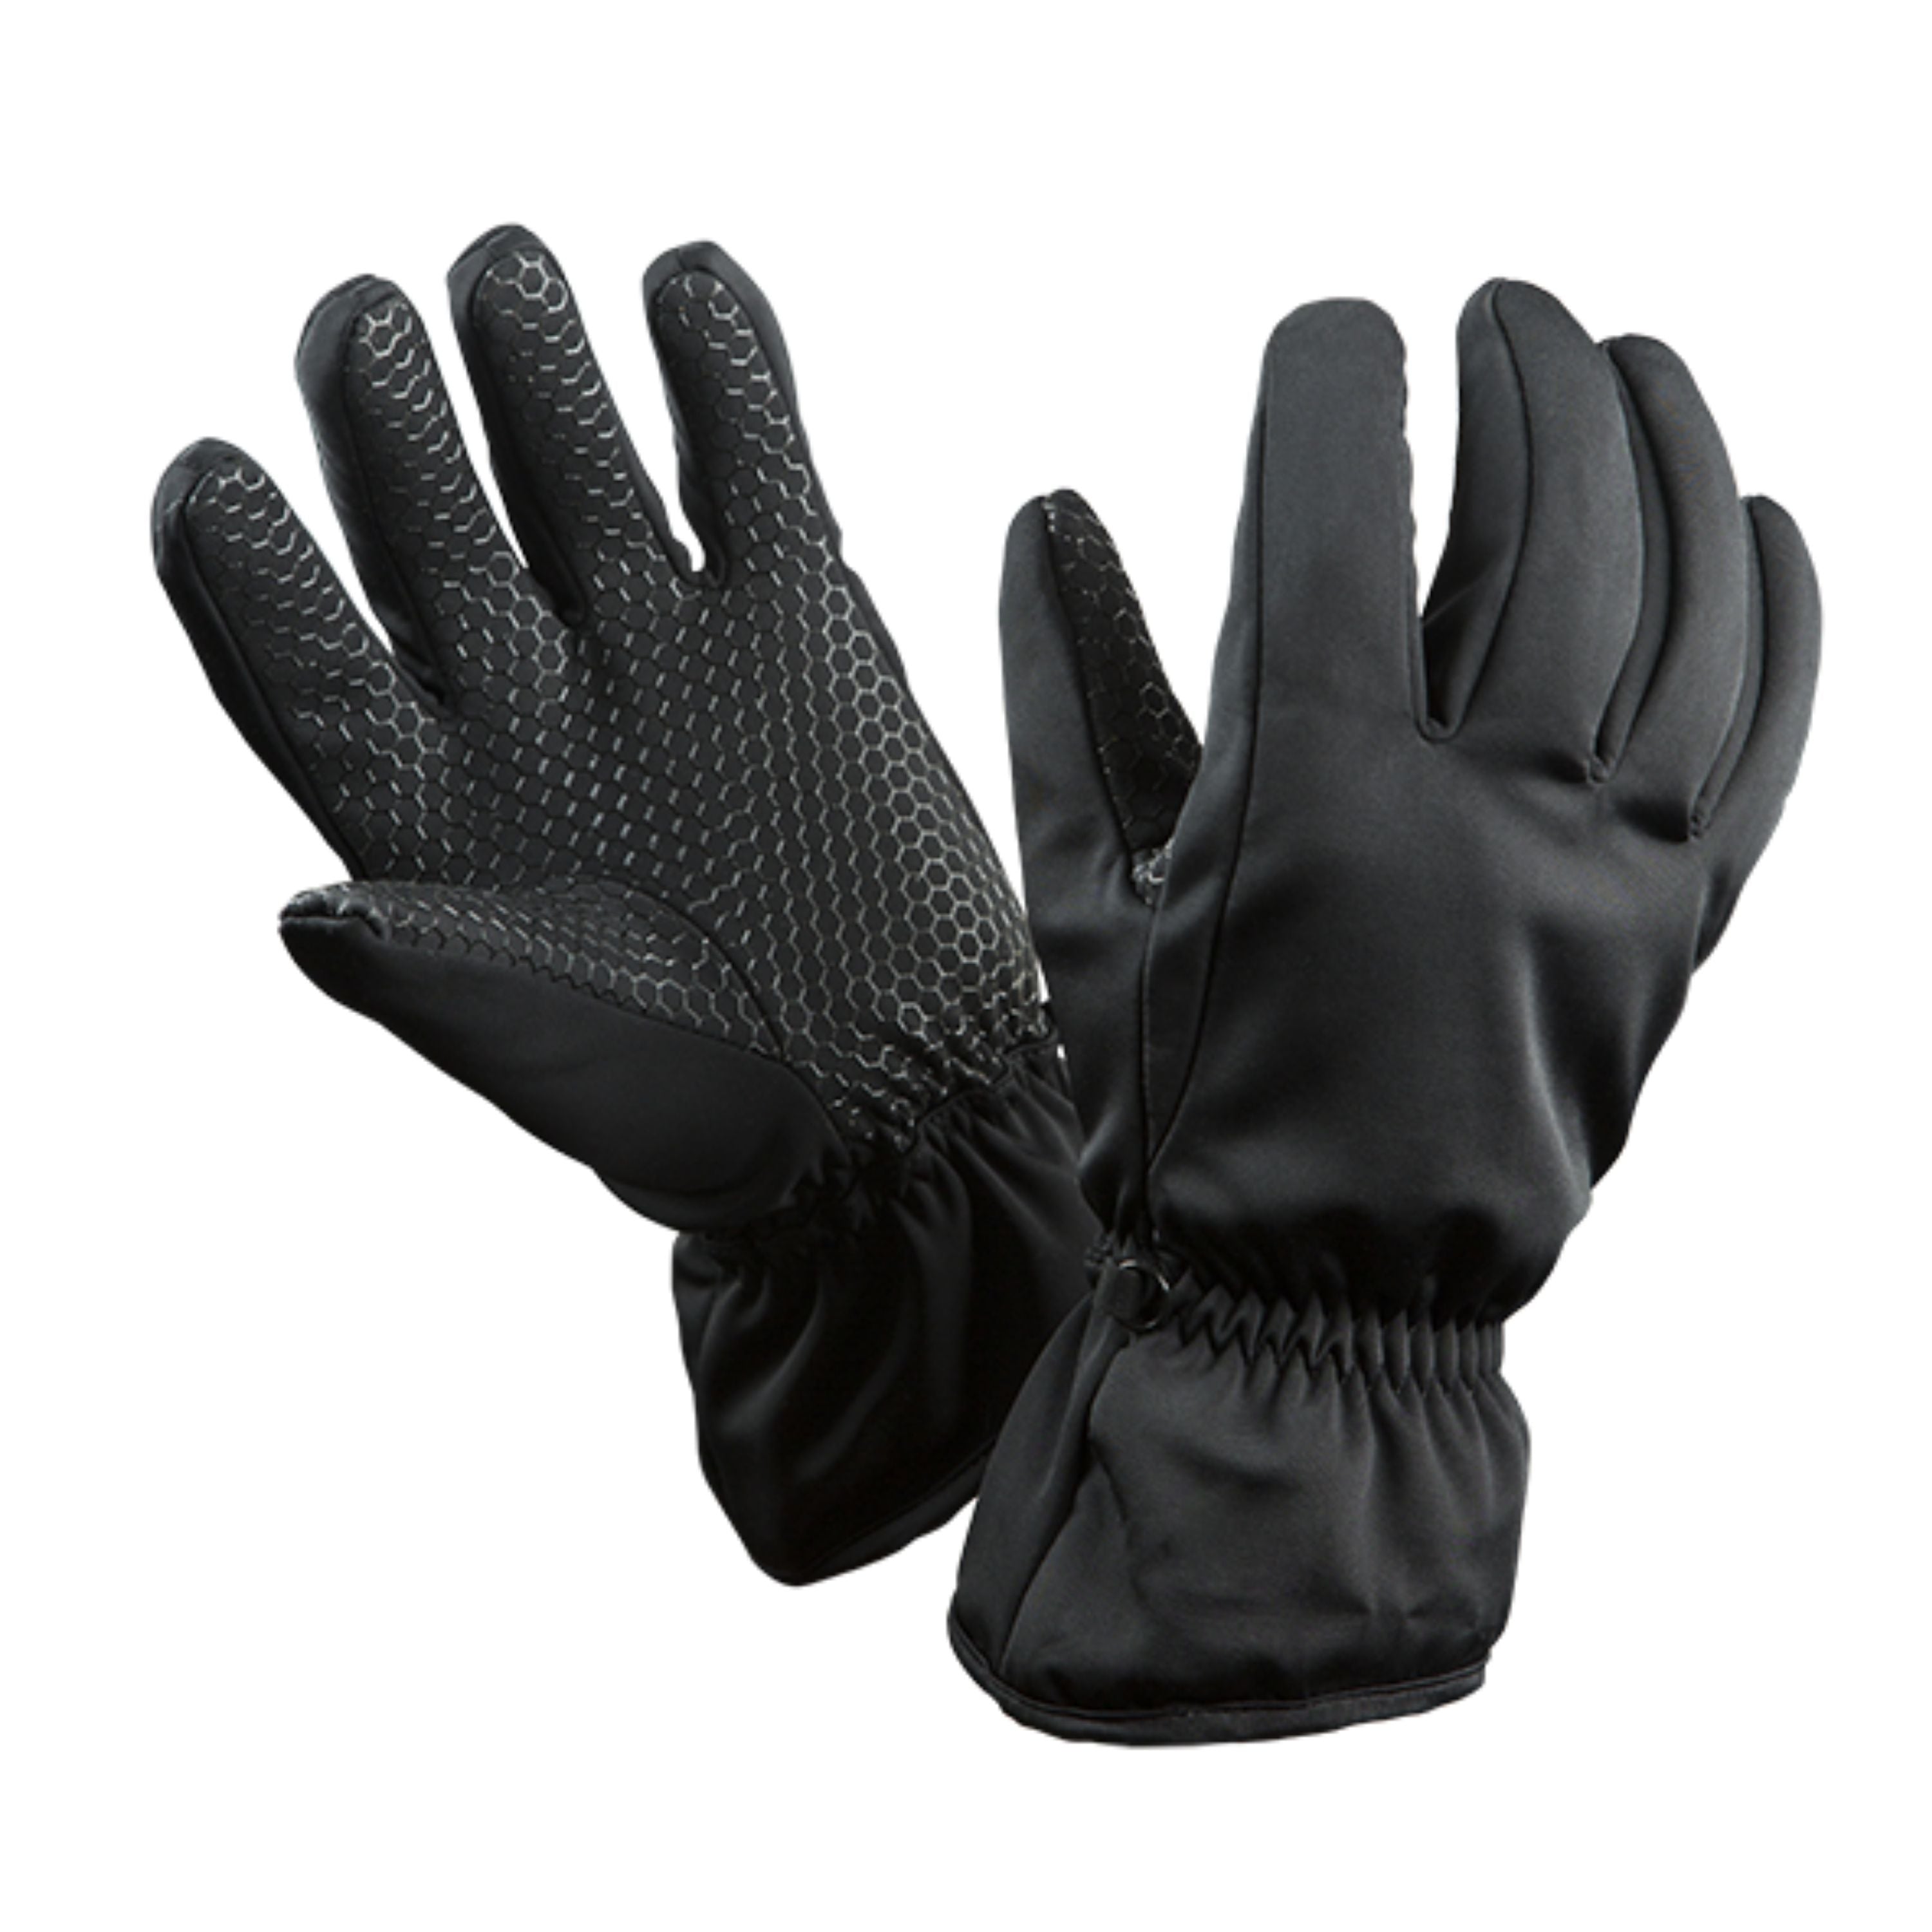 "Ultragrip softshell" city gloves - Women's